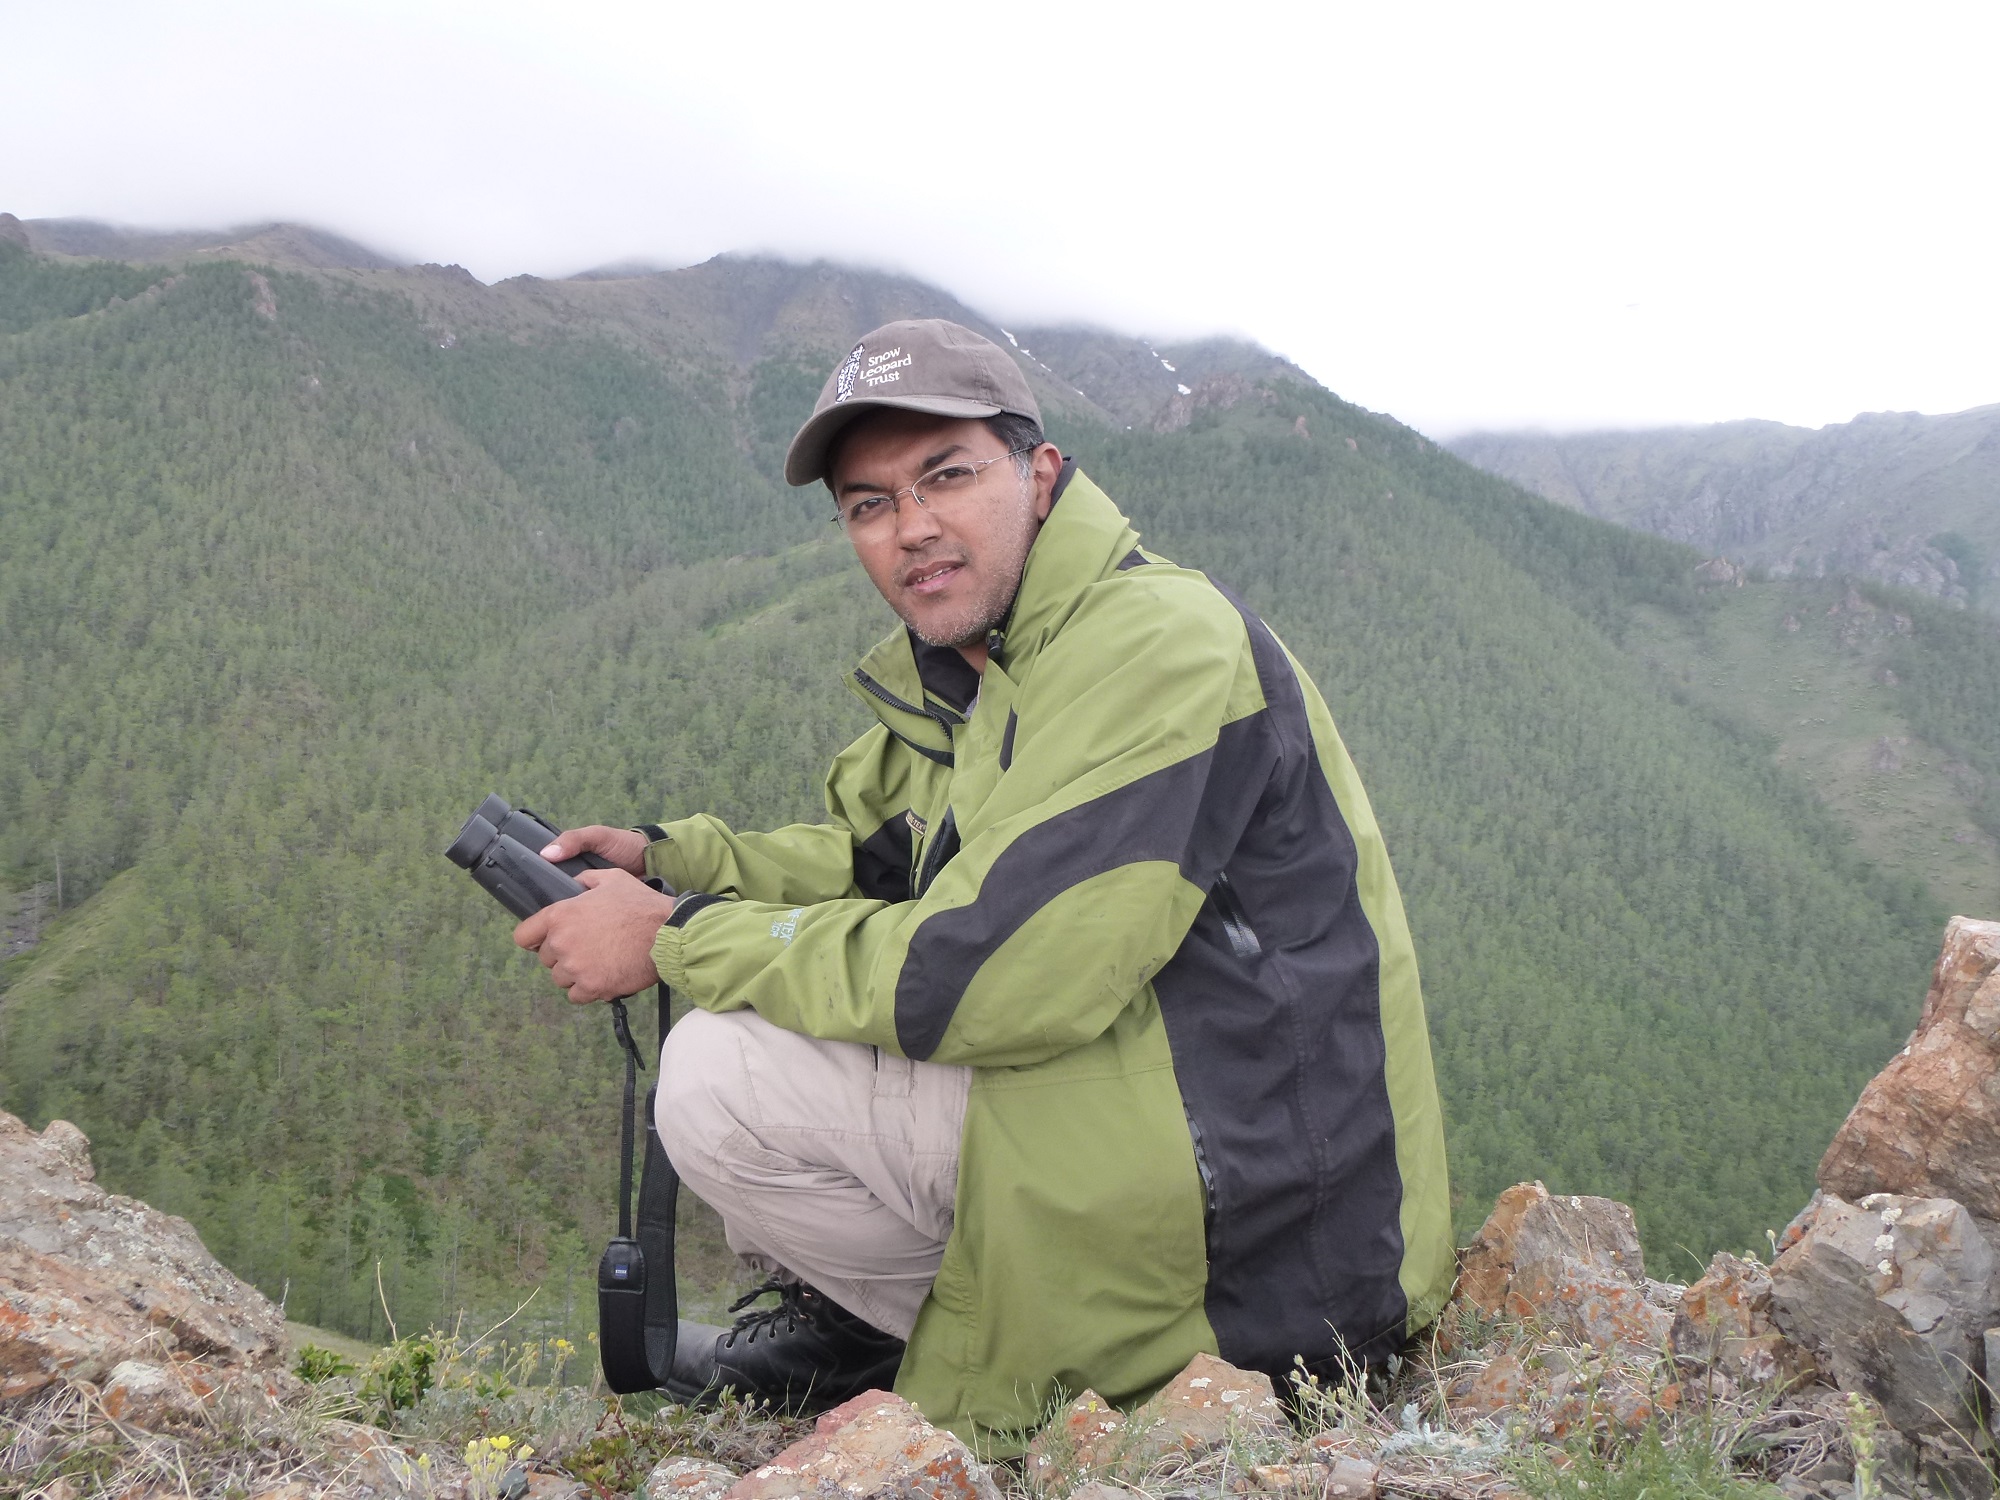 Man sits with binoculars in vast mountain range